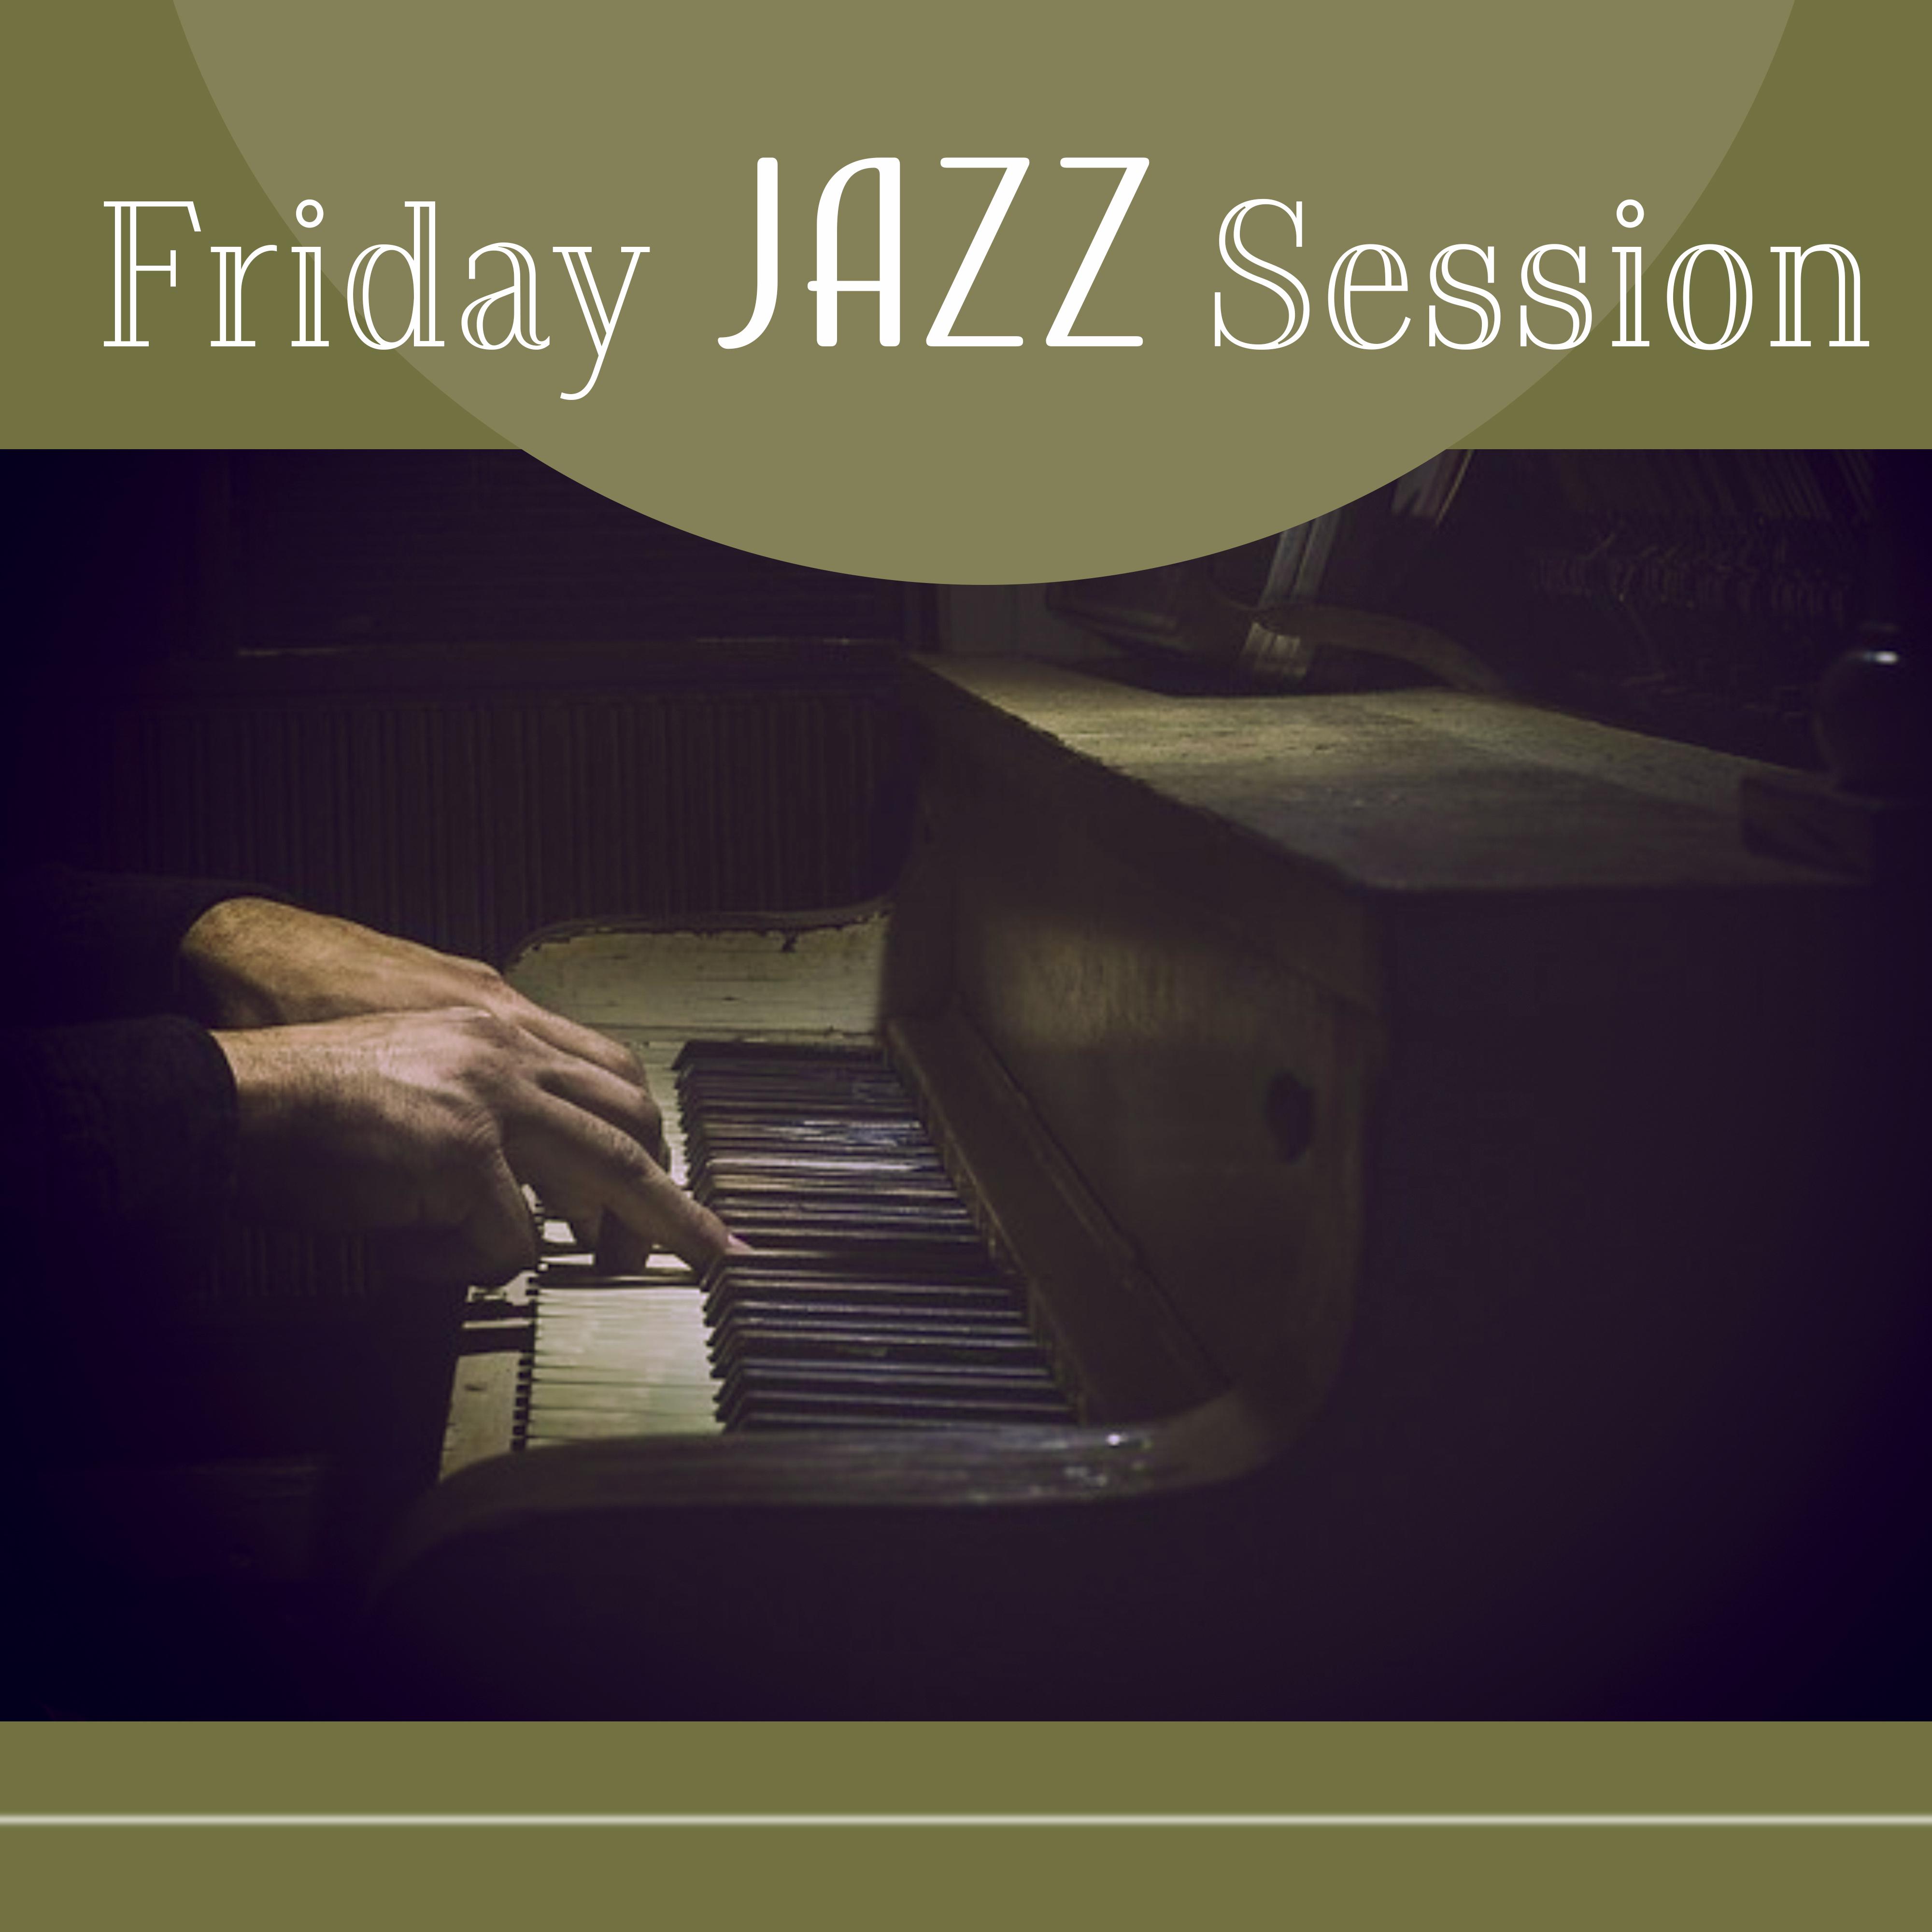 Friday Jazz Session  Evening Jazz, Shades of Jazz, Night Session, Calming Music, Piano Bar